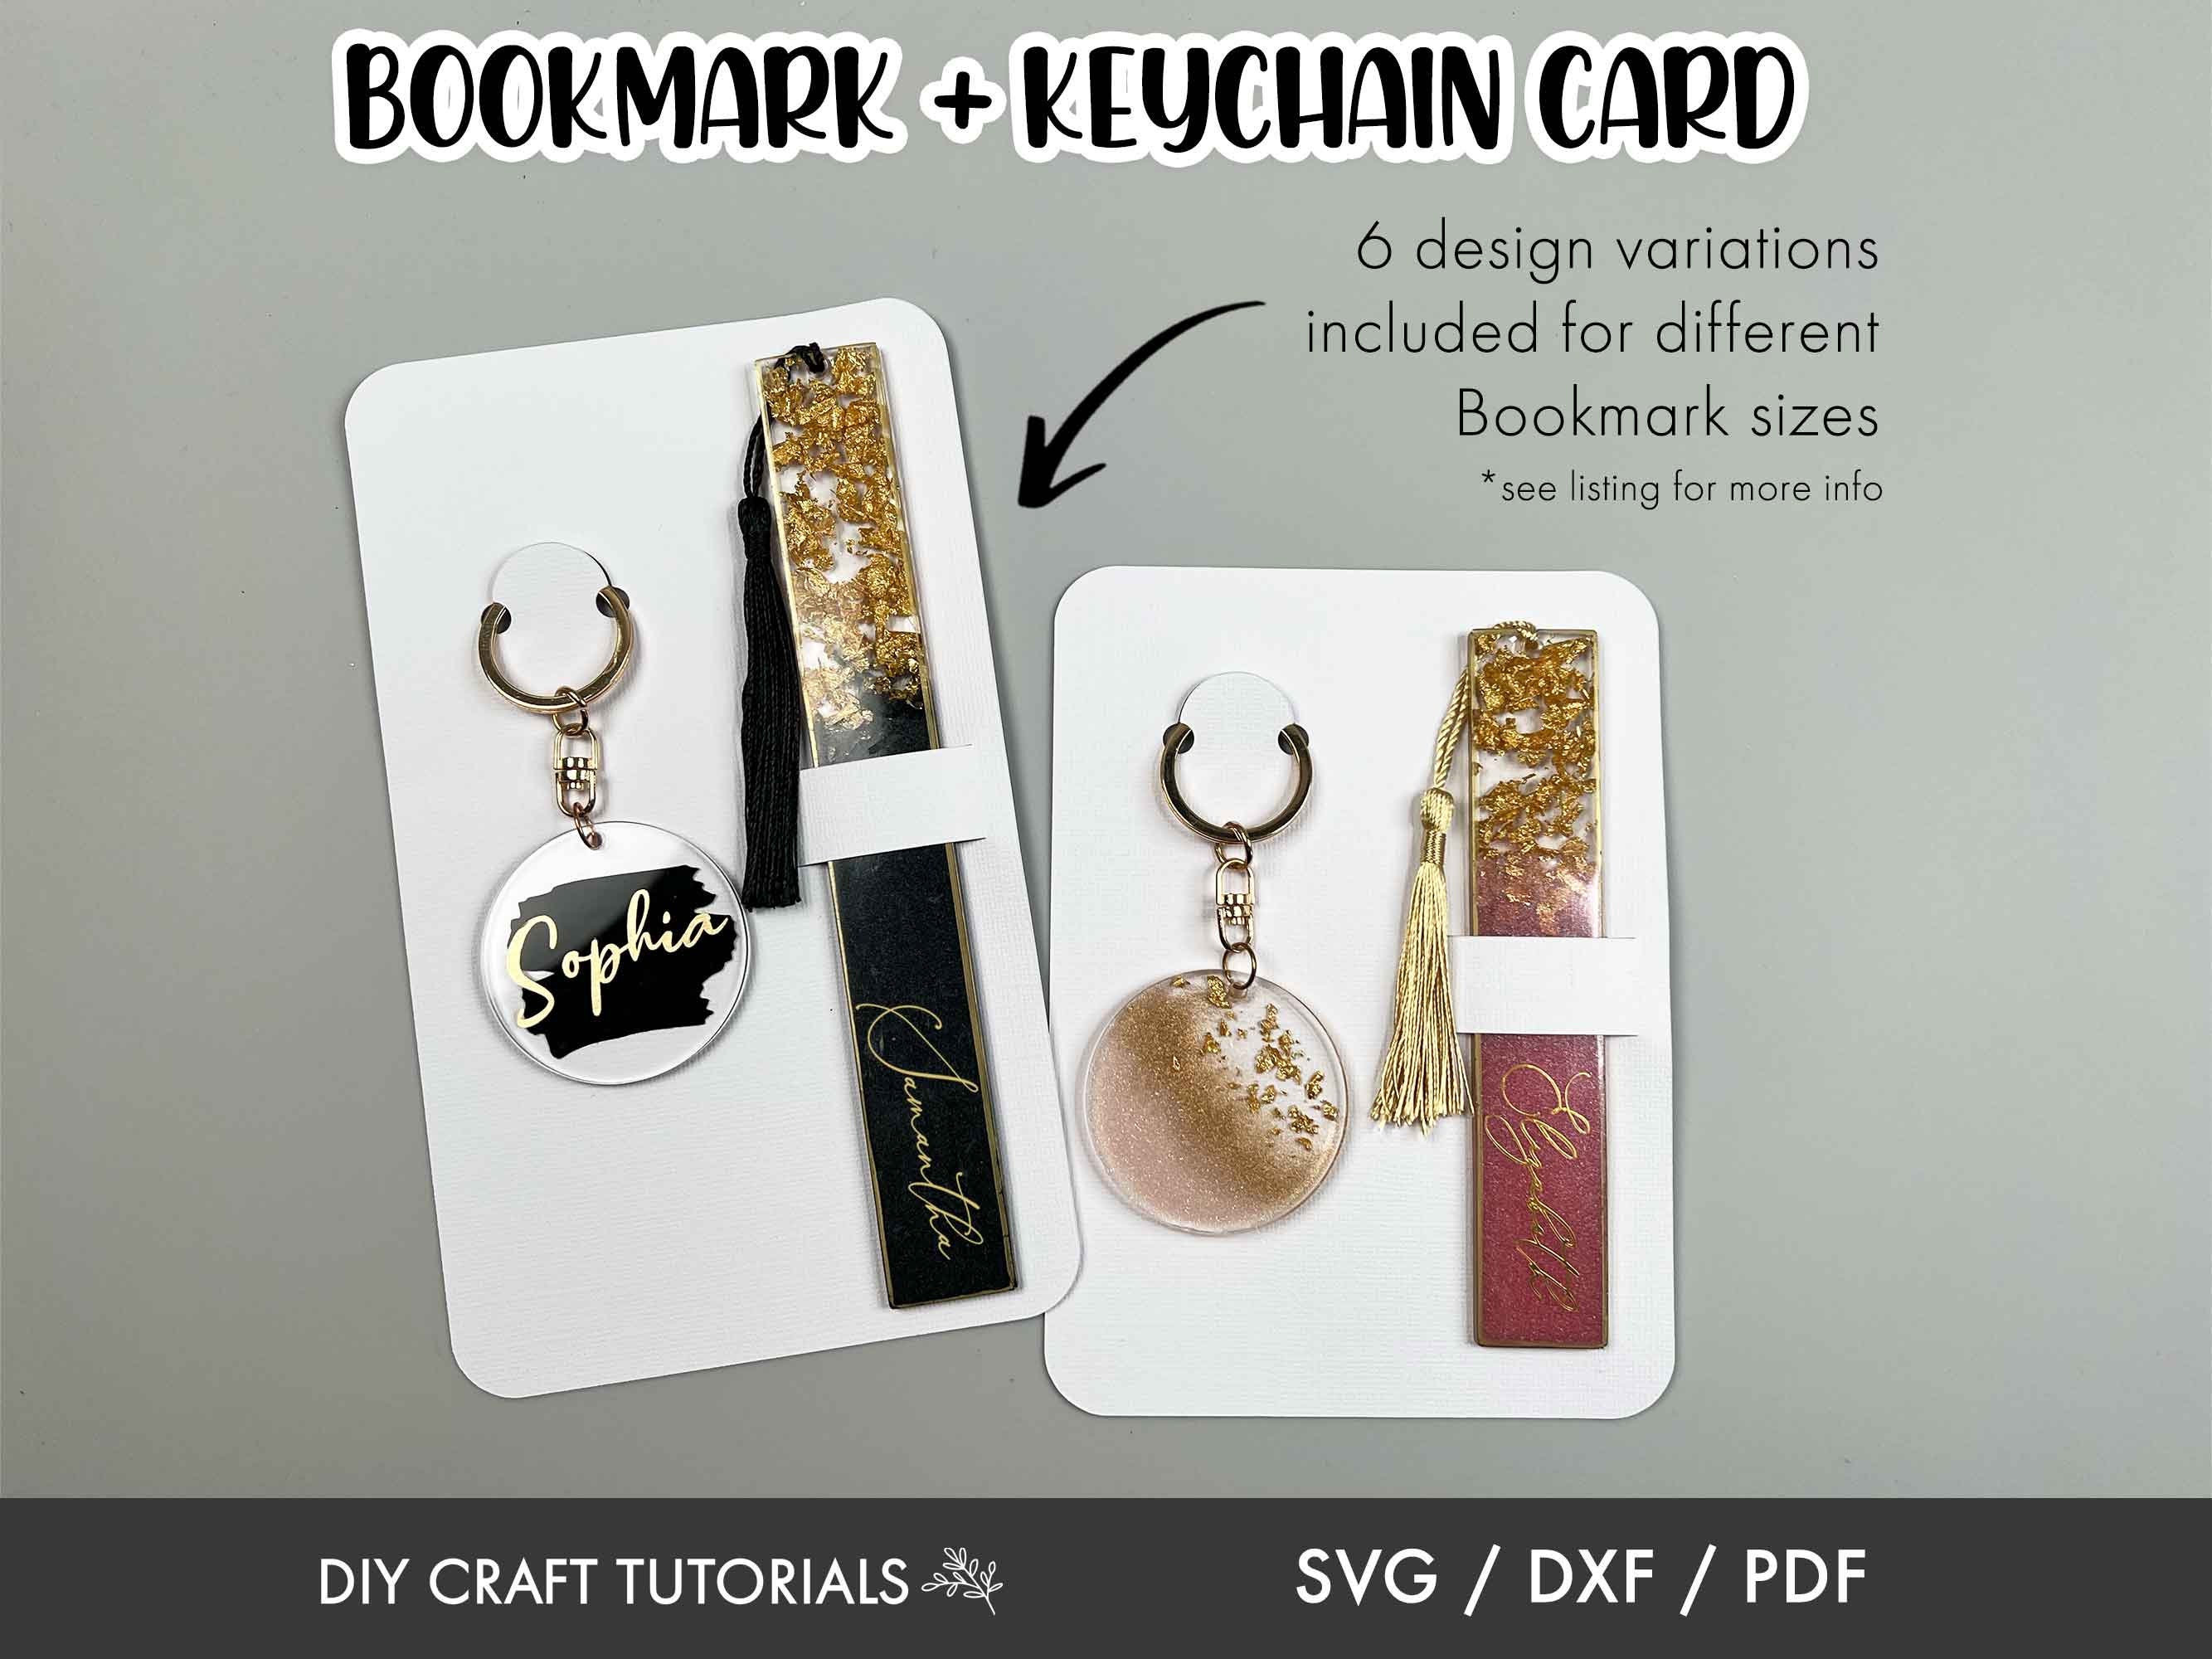 Double Keychain Display Card SVG – DIY Craft Tutorials